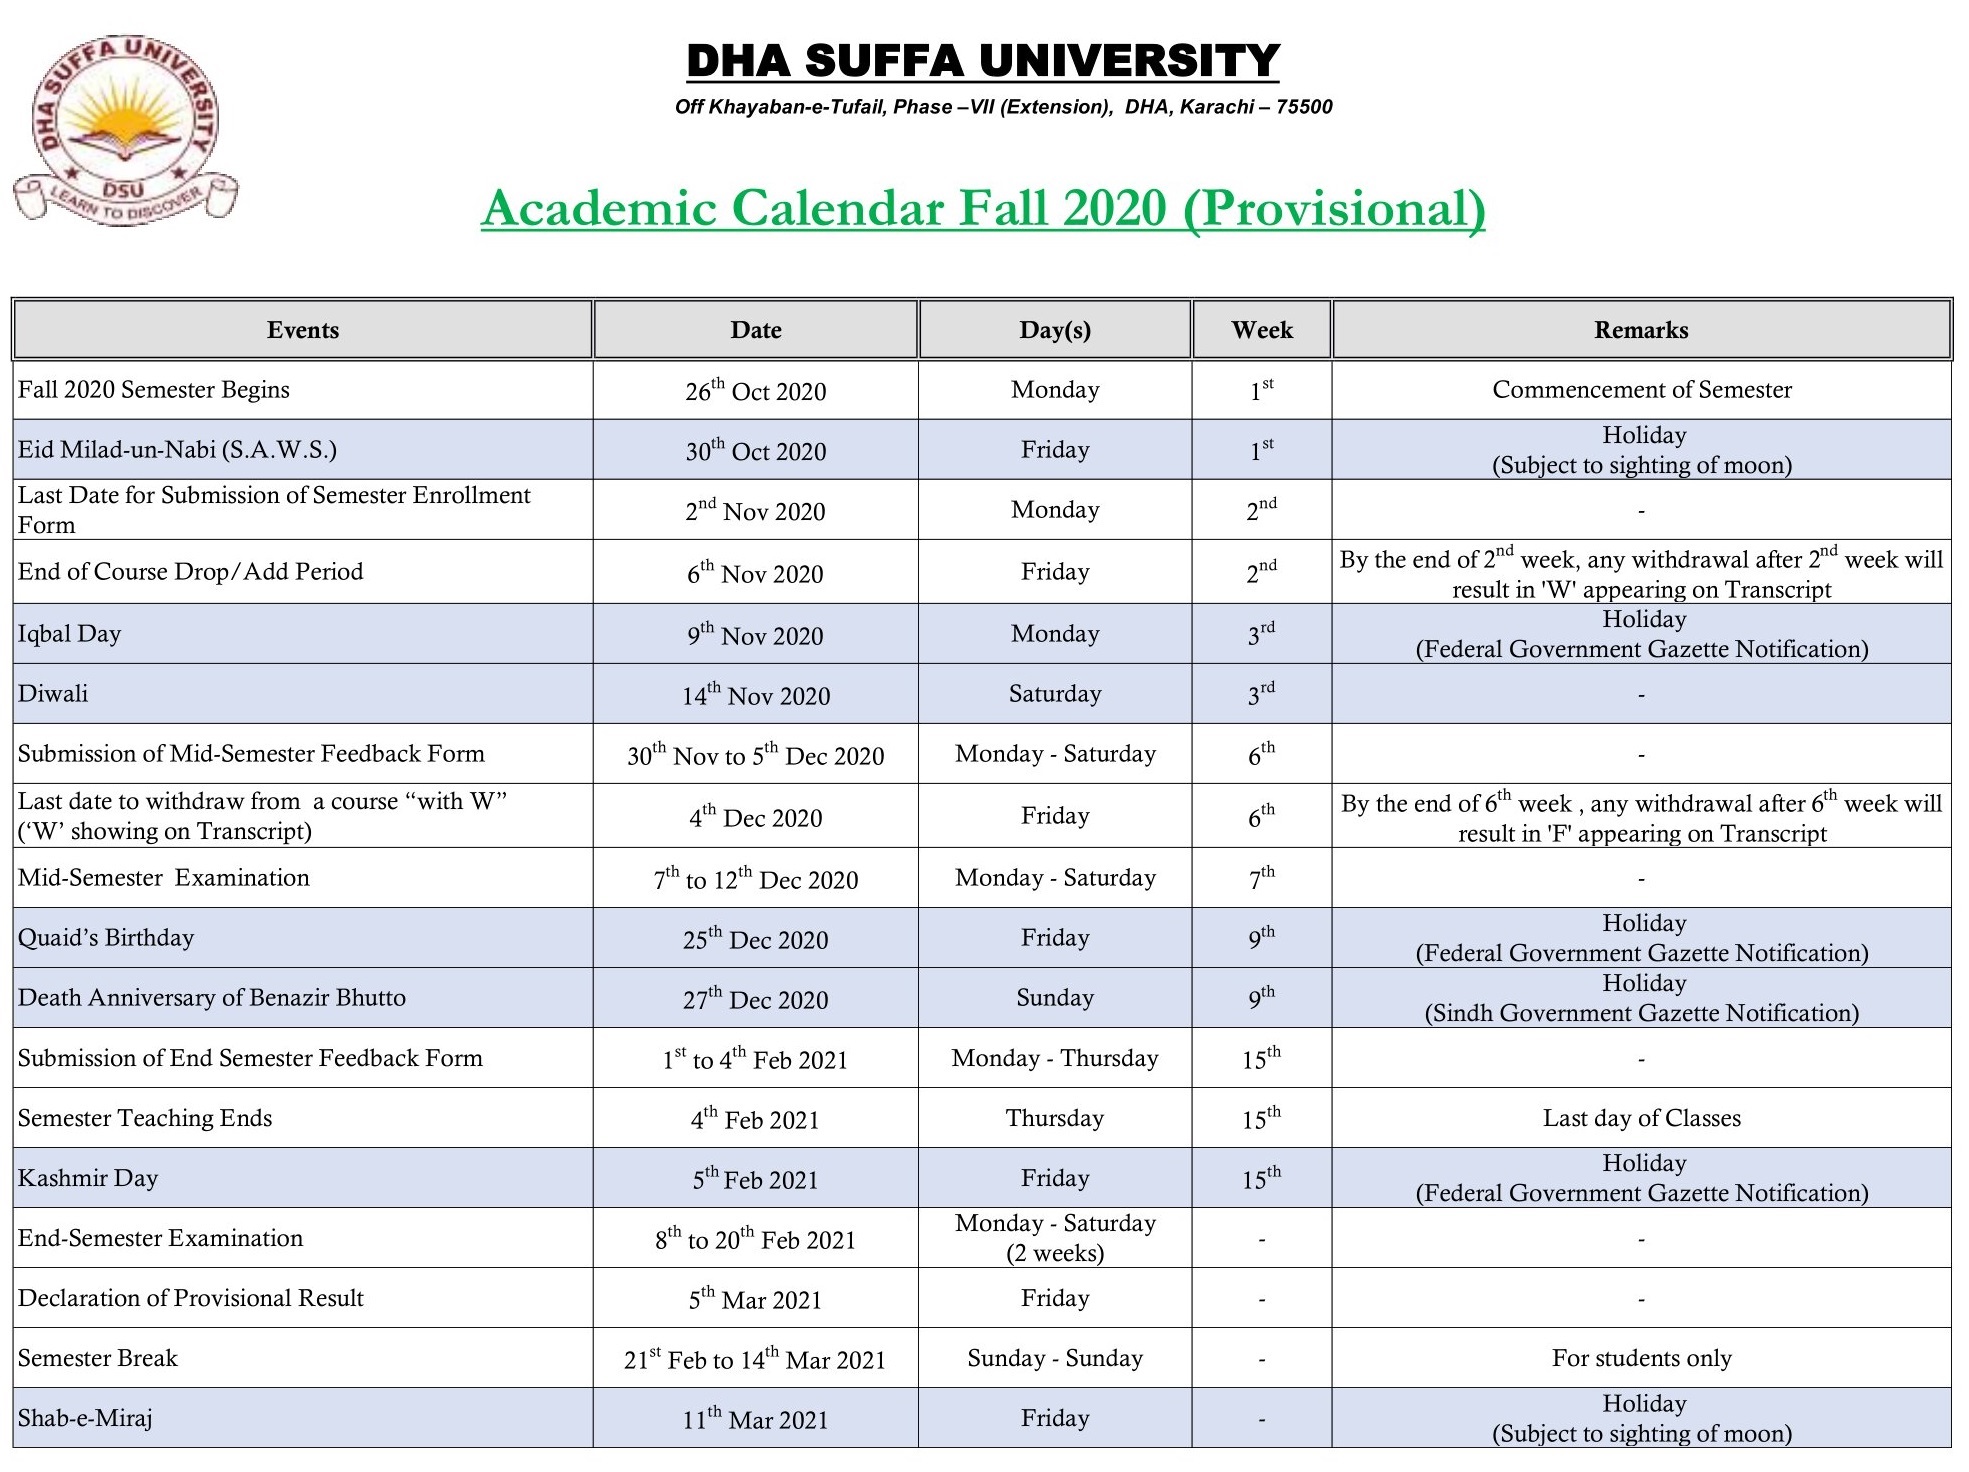 academic-calendar-fall-2020-dha-suffa-university